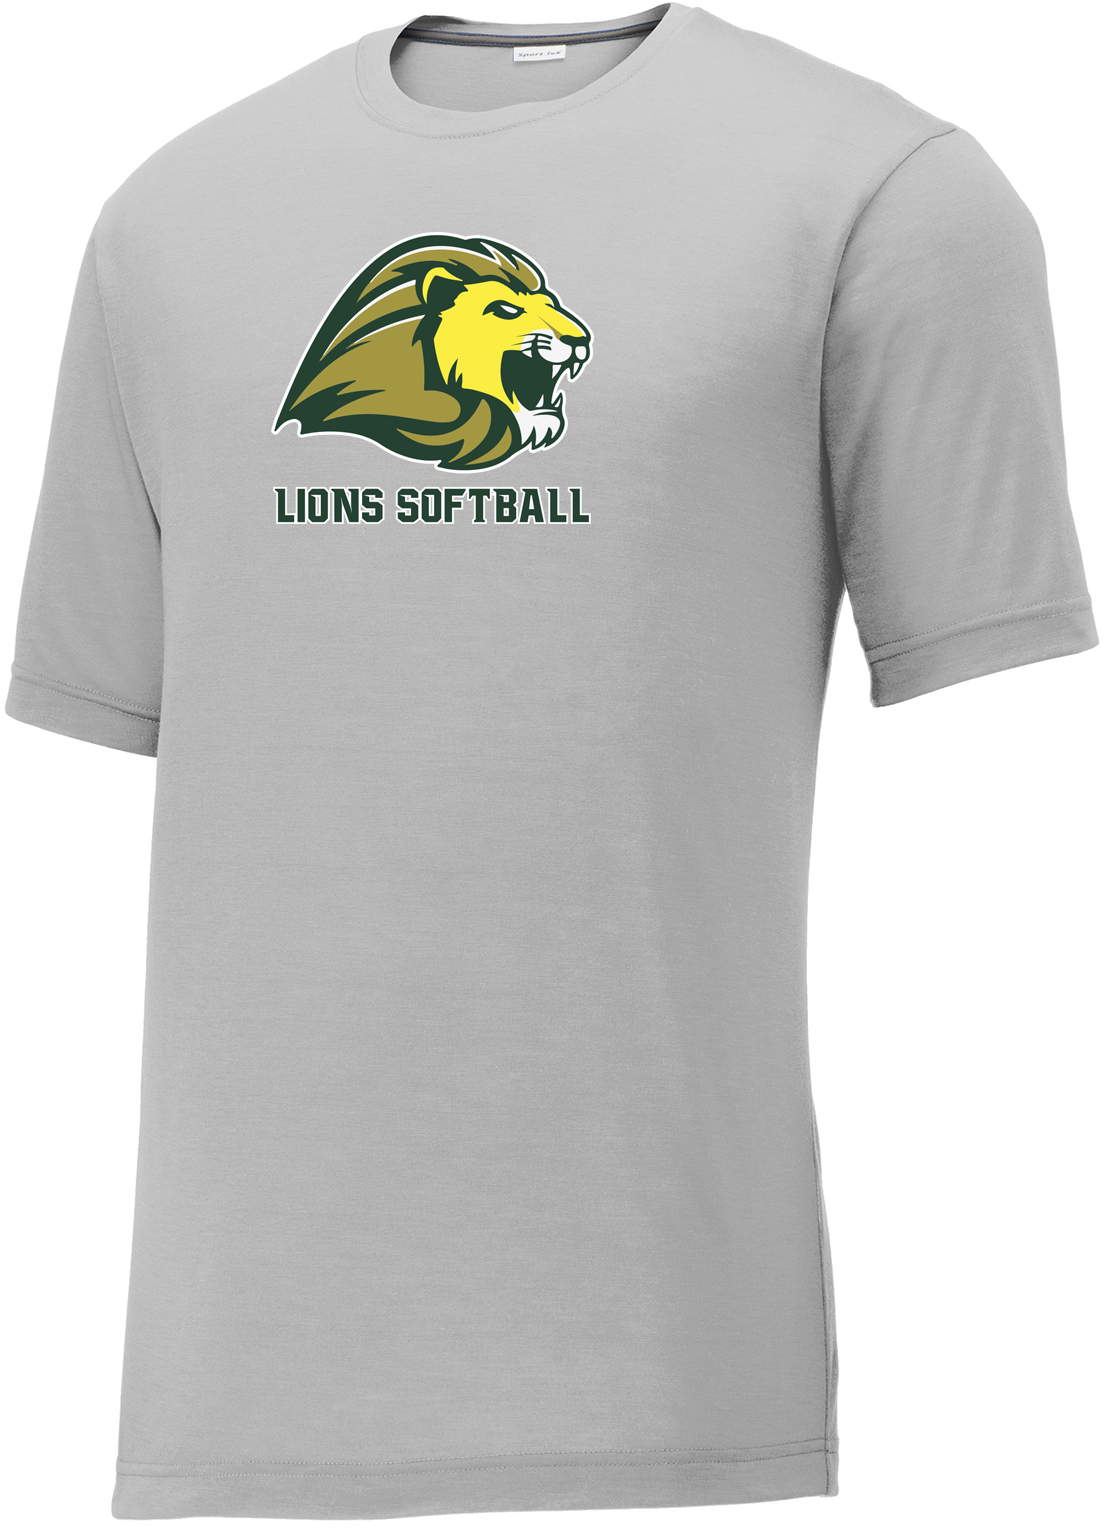 EP Lions Softball CottonTouch Performance T-Shirt